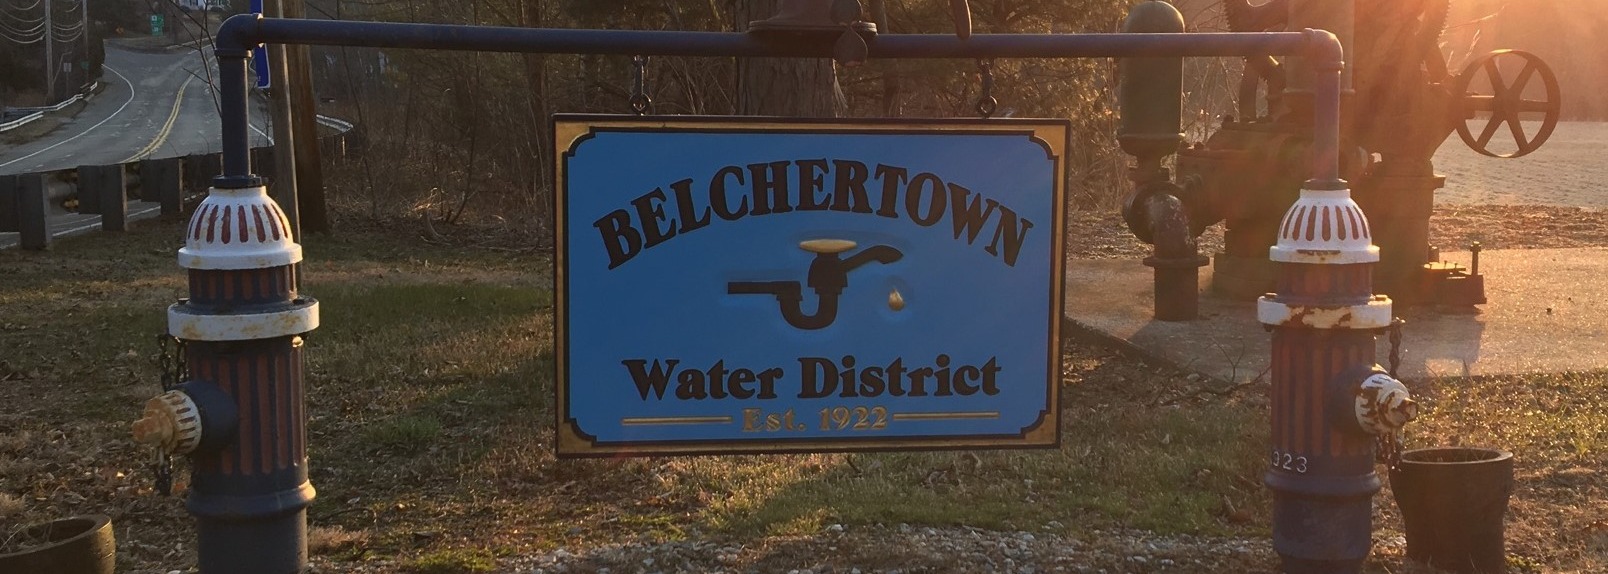 Belchertown Water District